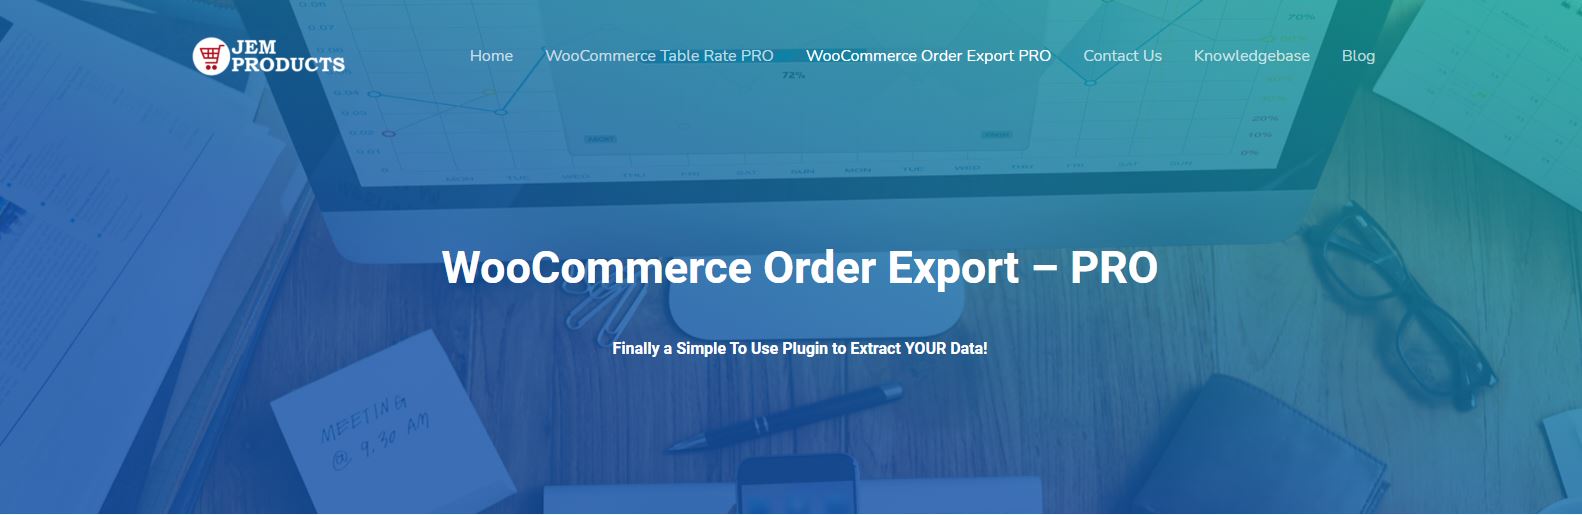 WooCommerce Order Export -  PRO